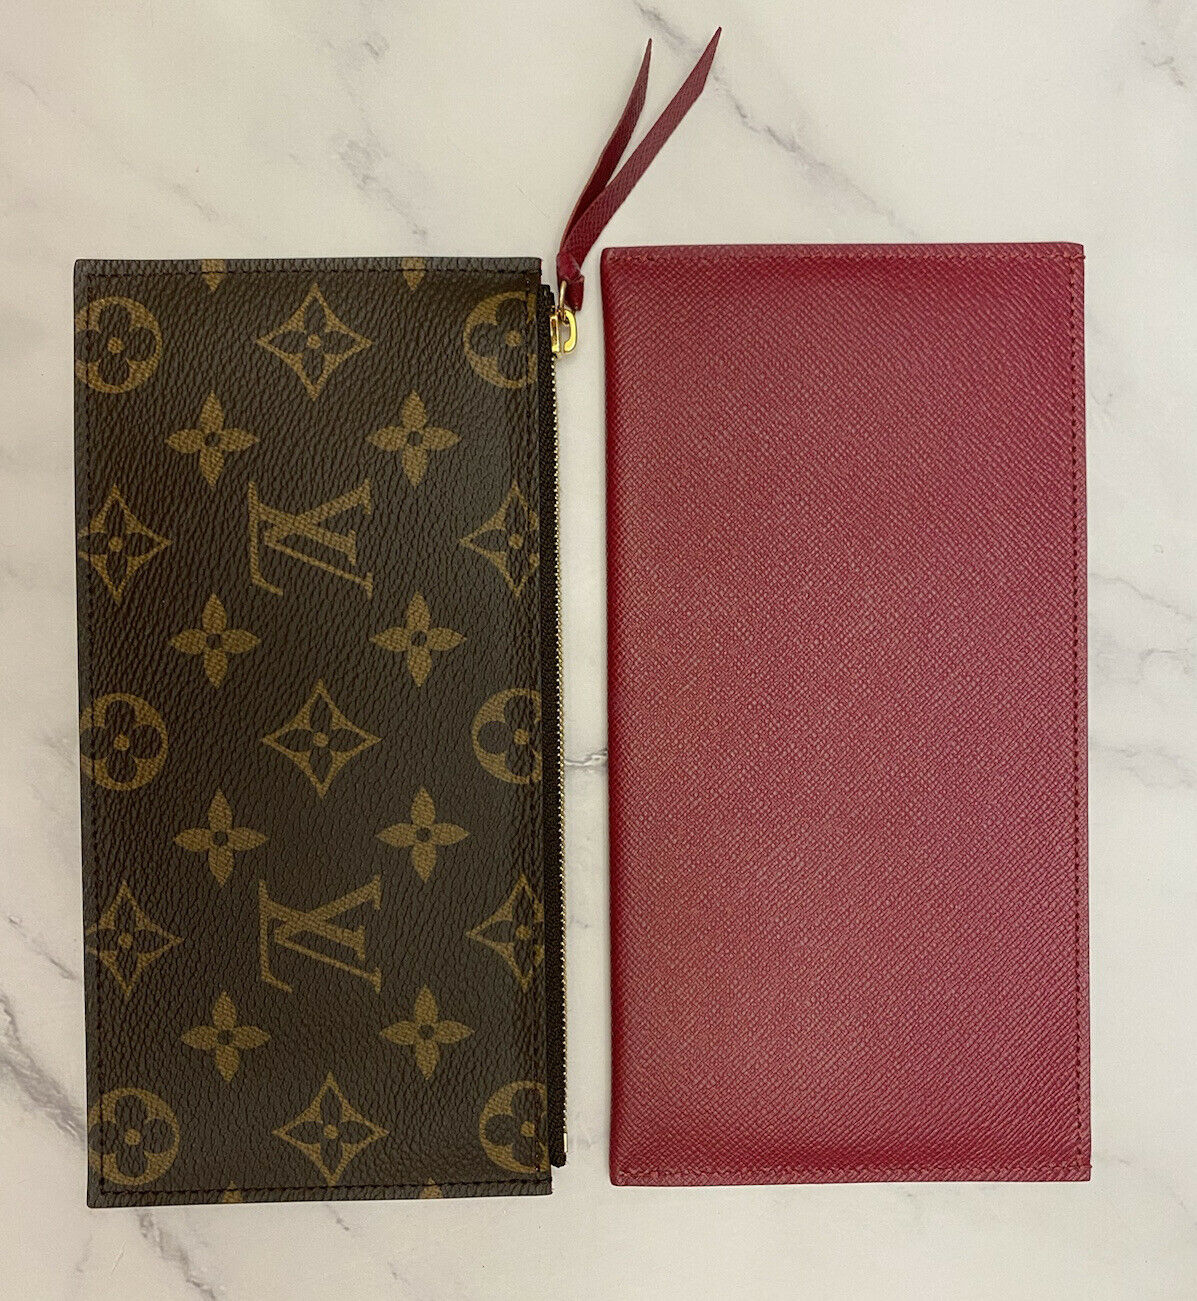 Louis Vuitton Light Pink Leather Long Card Holder Felicie Insert 13lk810s